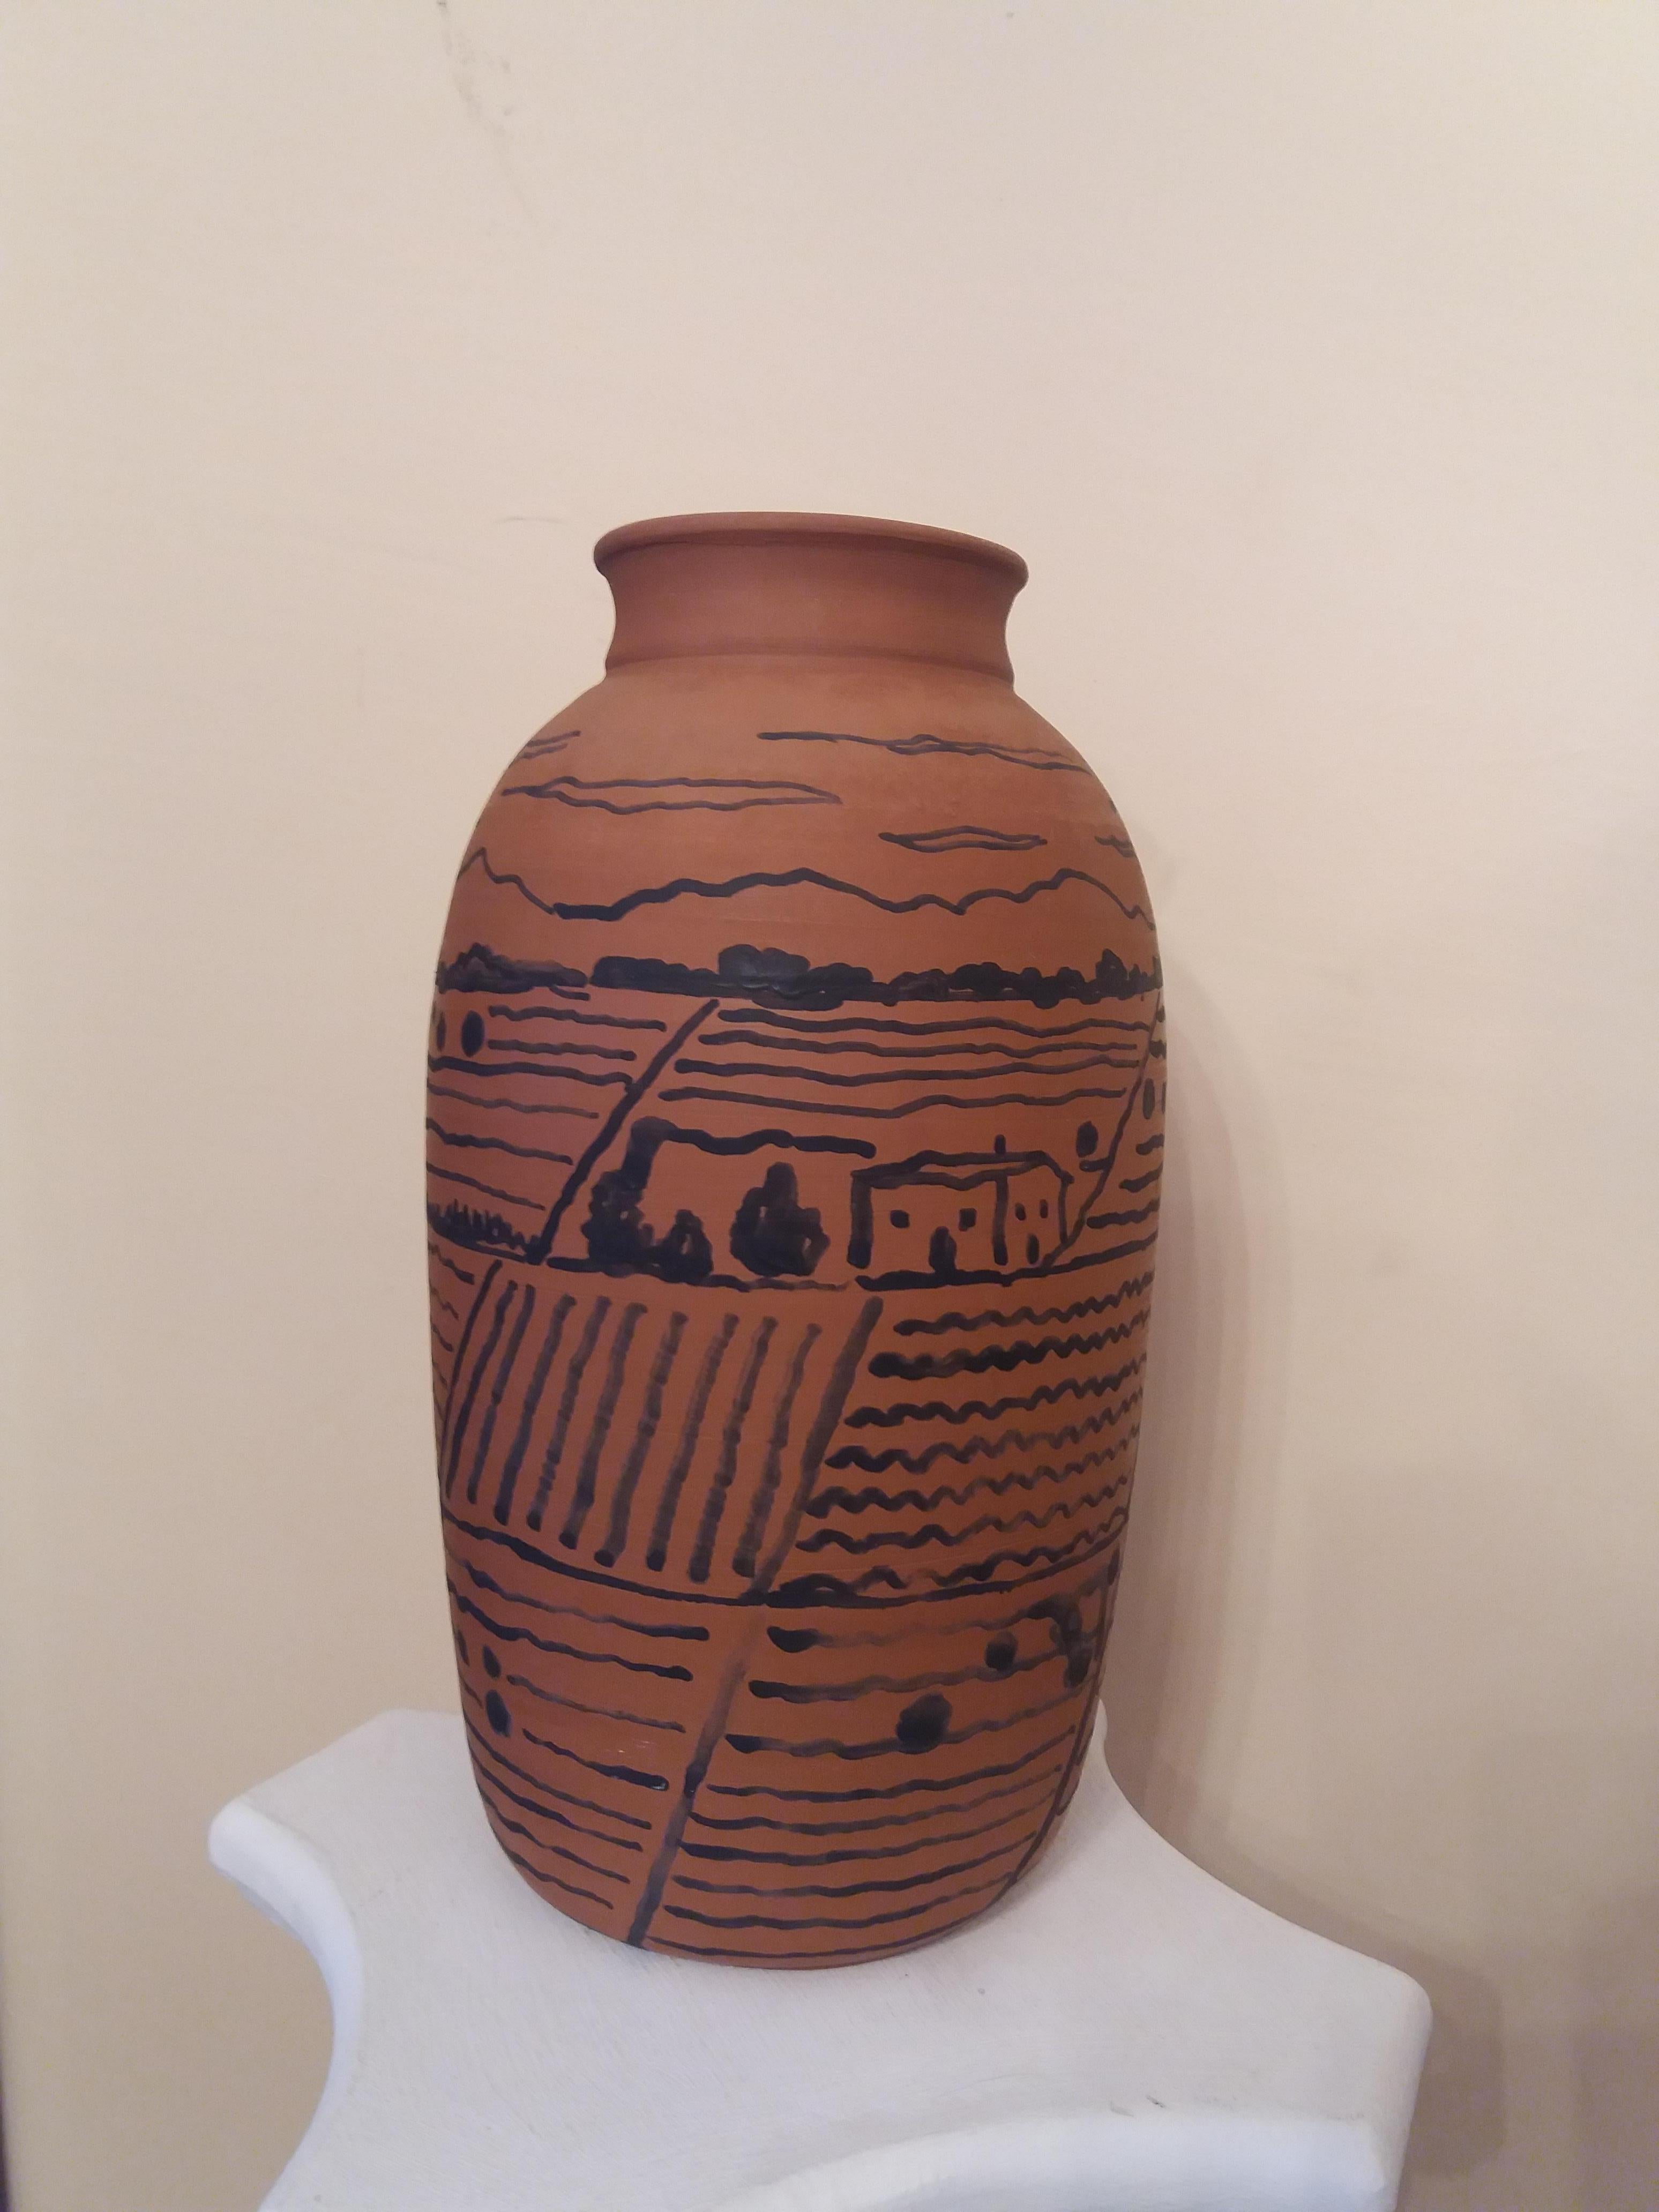  Graspar Riera  Terracotta Cylinder  Mallorca original ceramic sculpture For Sale 1